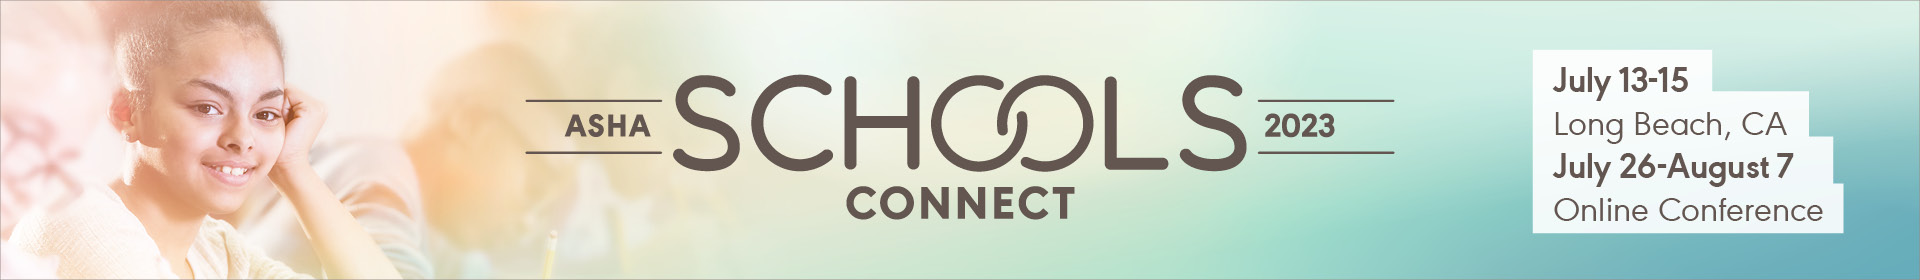 ASHA Schools Connect 2023 Event Banner